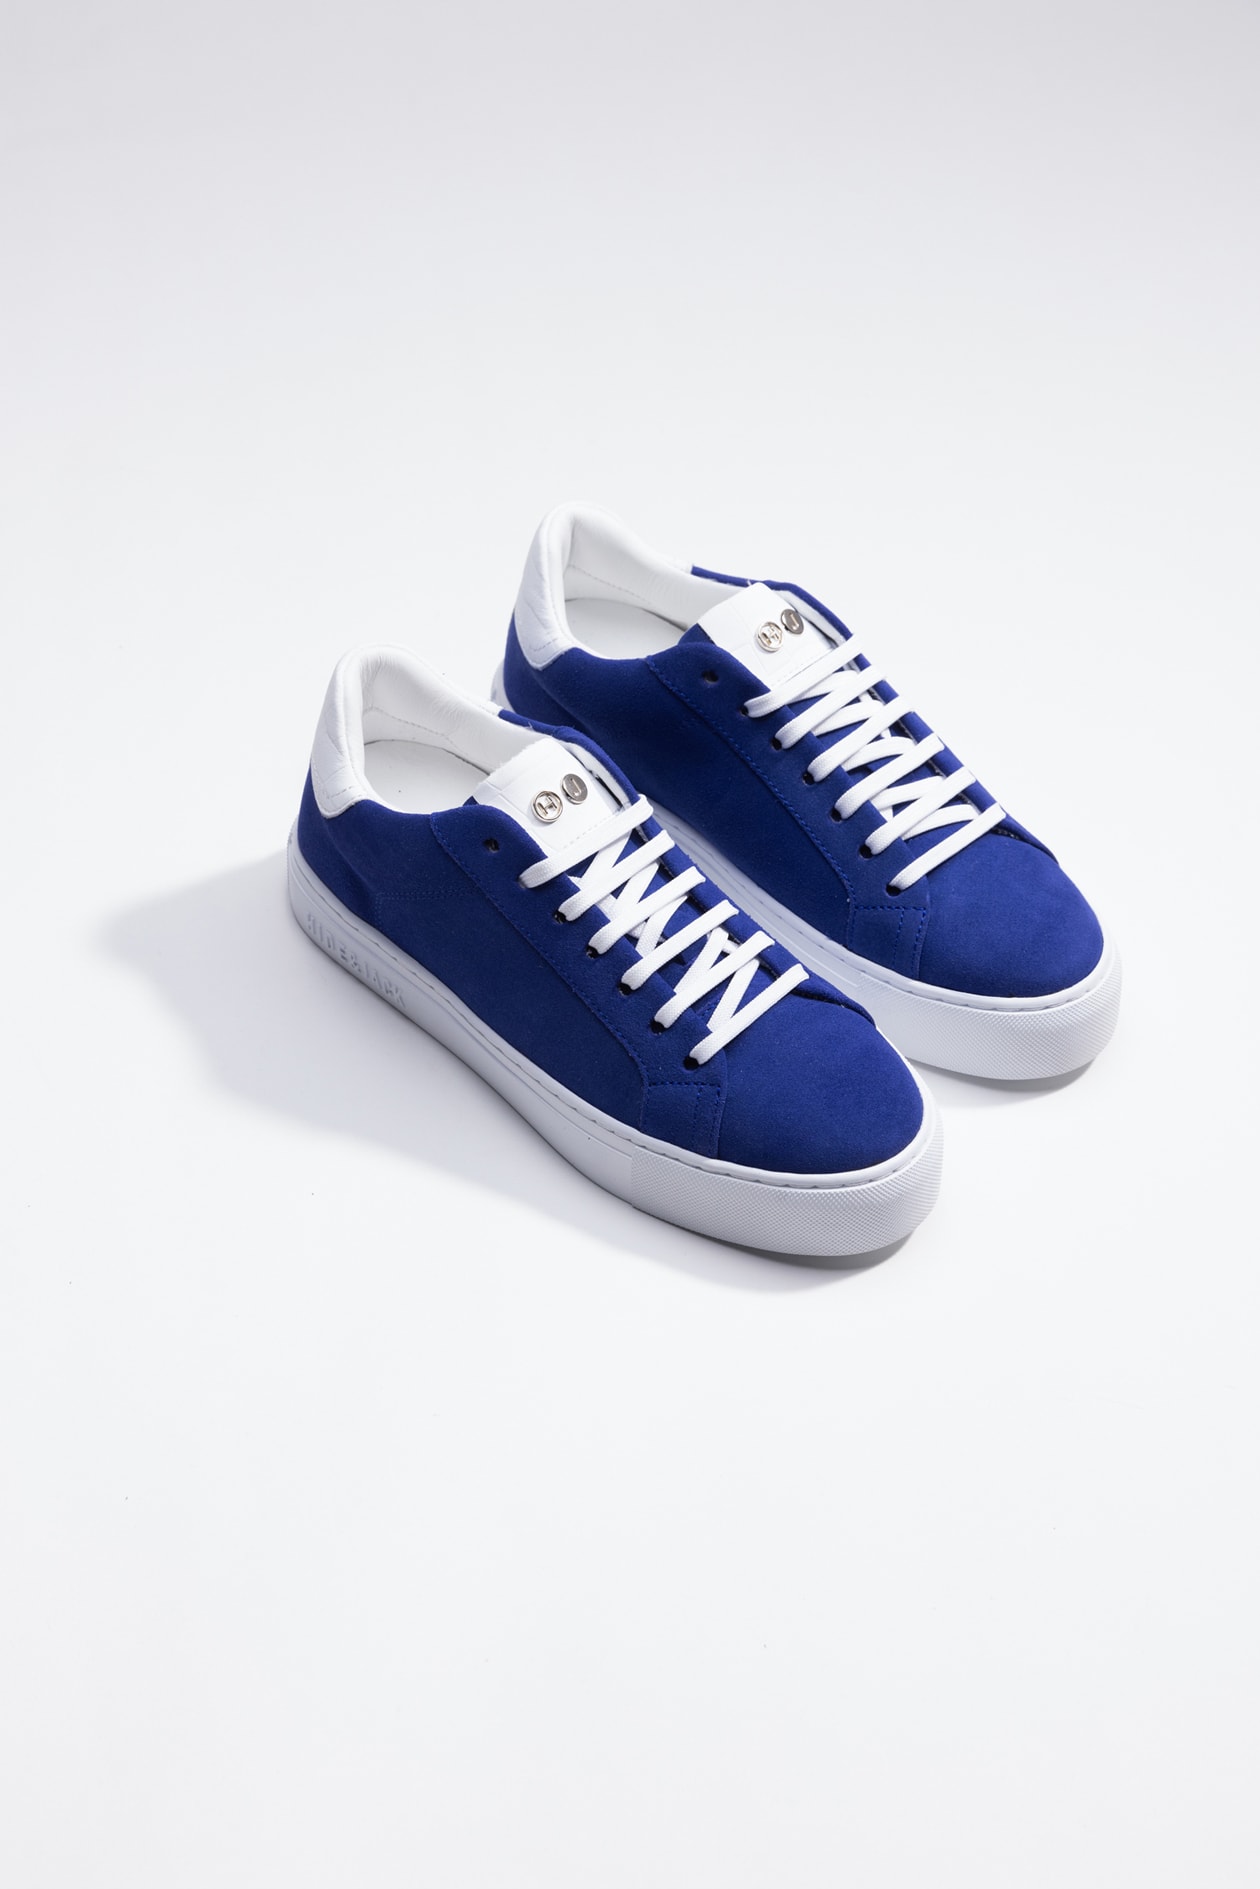 Hide&amp;jack Low Top Sneaker - Essence Oil Azure White